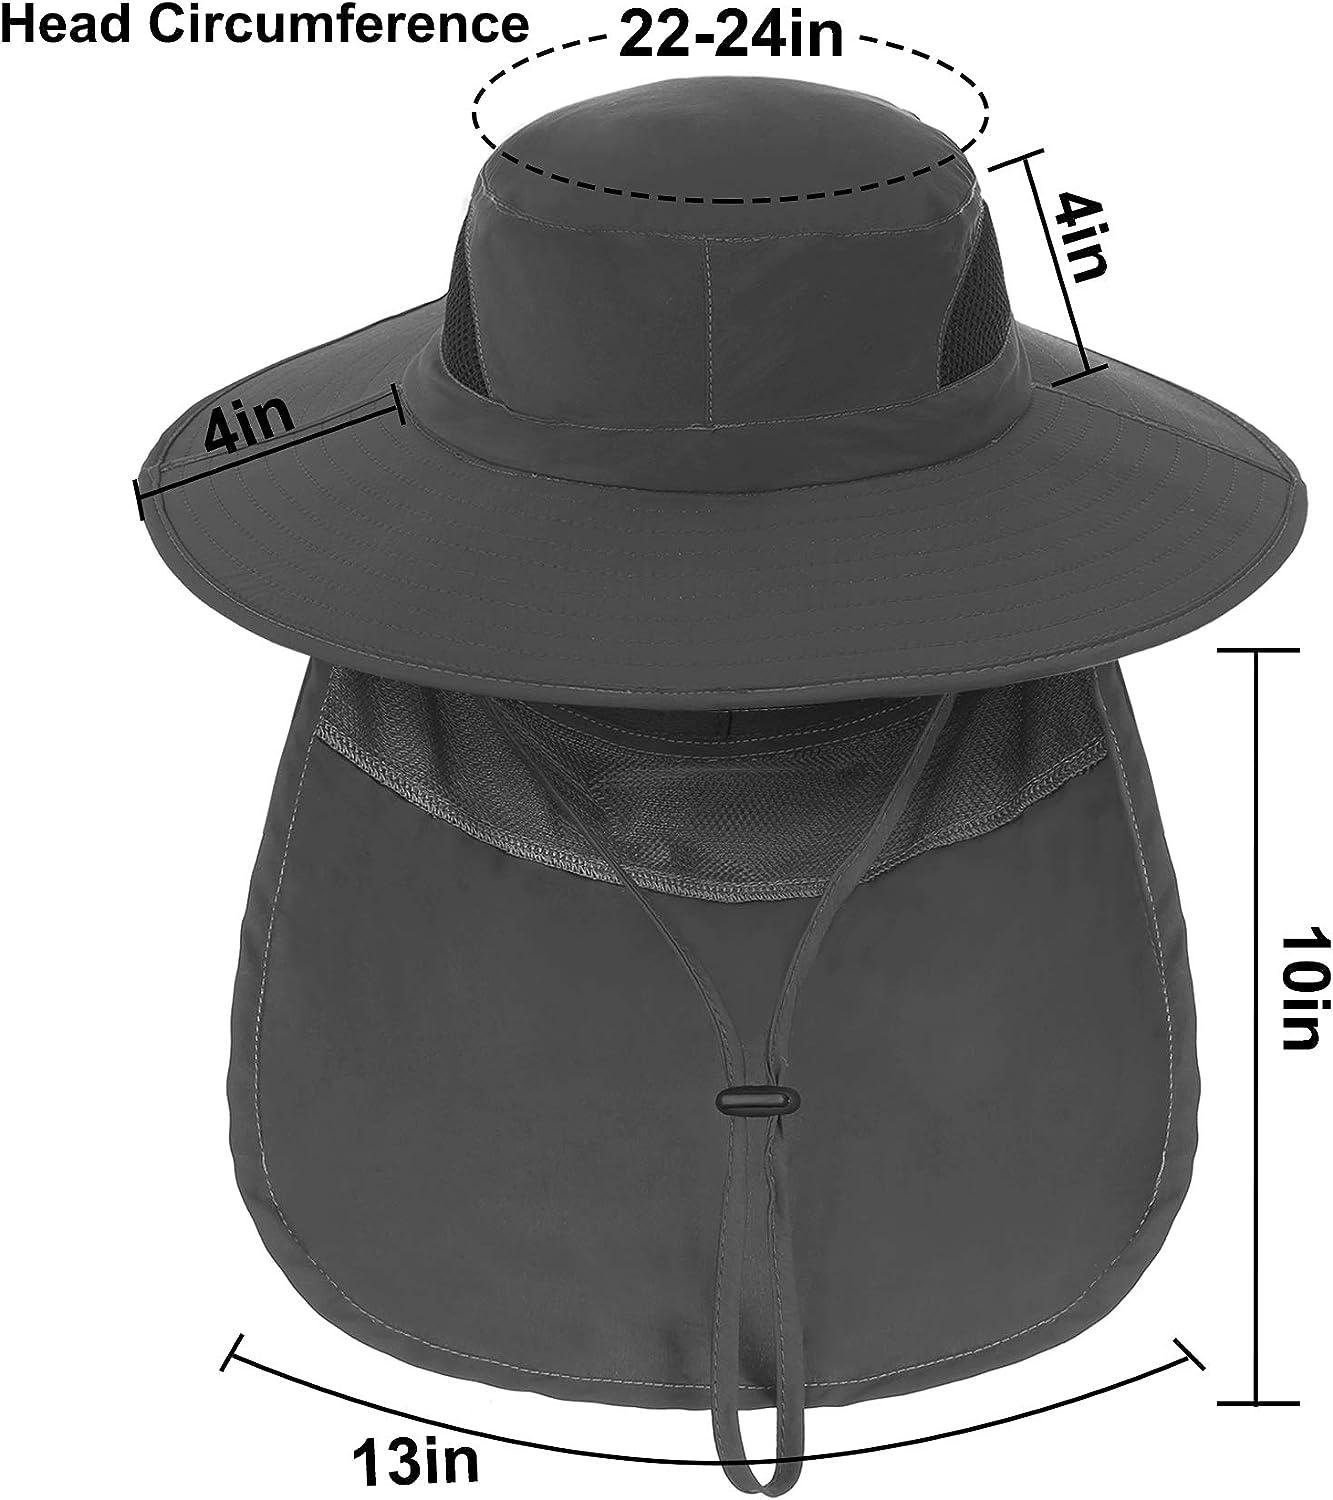  Sun Hats for Men Women Fishing Hat UPF 50 Wide Brim